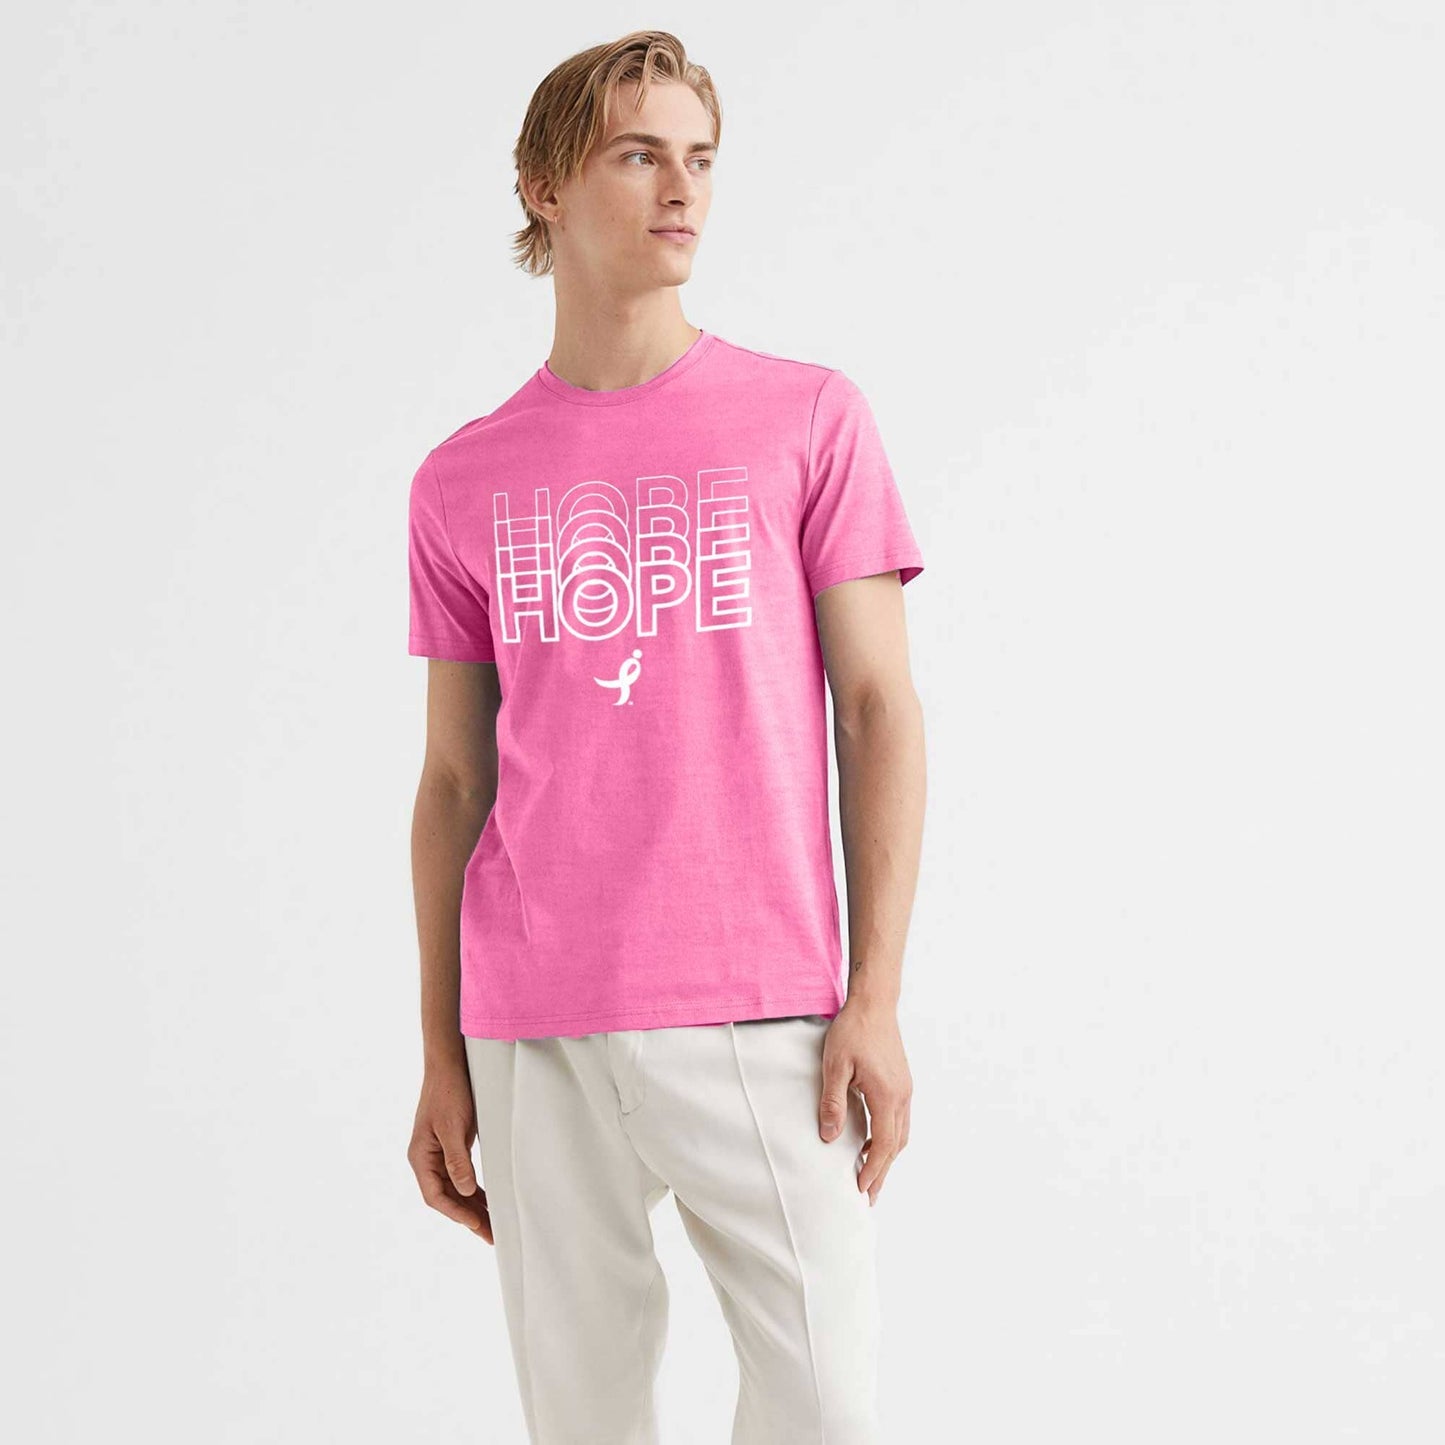 Men's Hope Printed Short Sleeve Tee Shirt Men's Tee Shirt HAS Apparel Pink S 